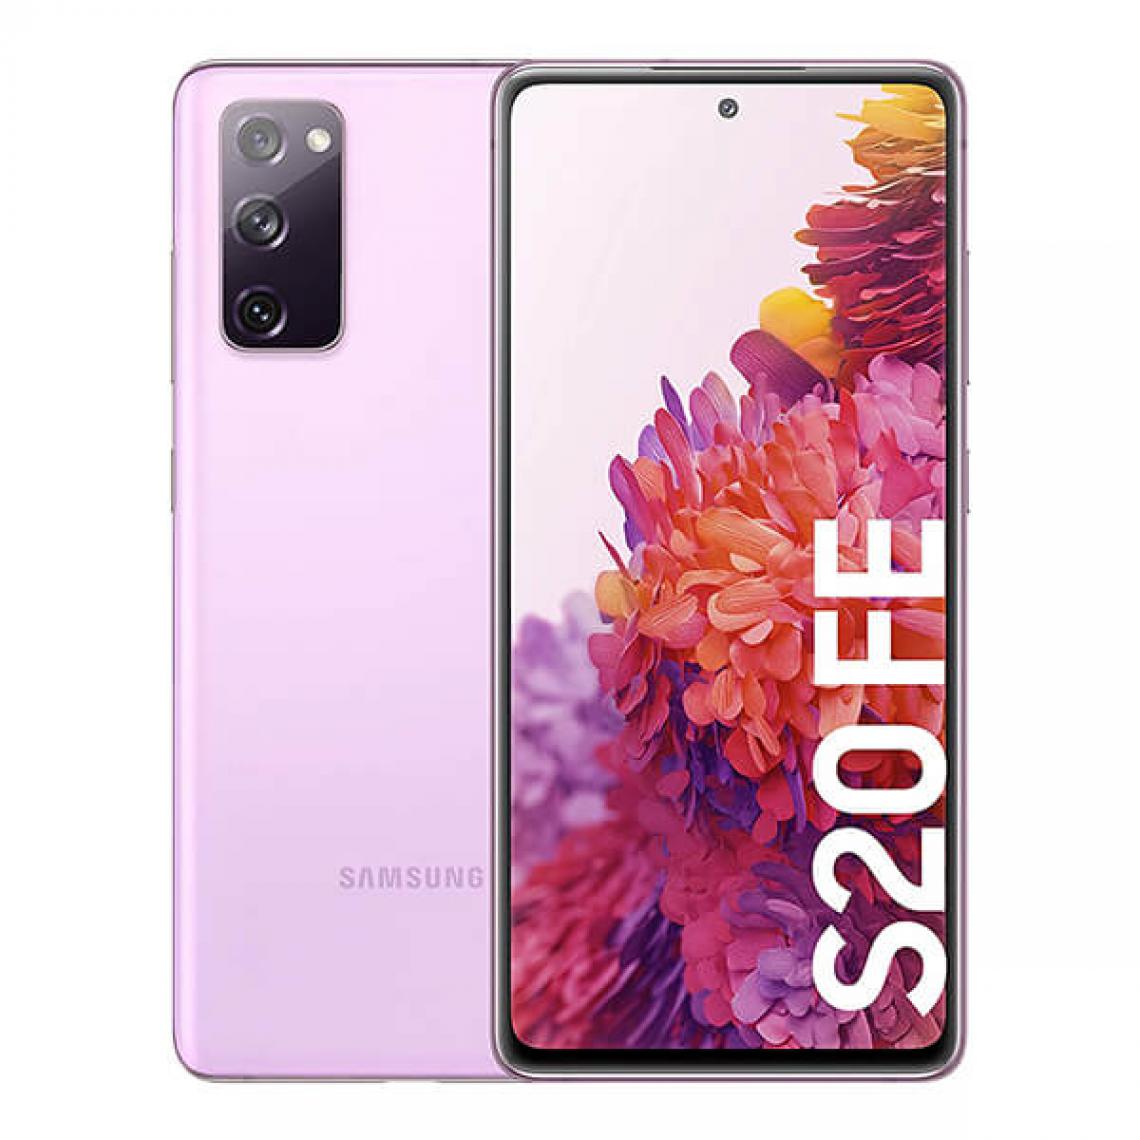 Samsung - Samsung Galaxy S20 FE 6Go/128Go Violet (Cloud Lavander) Dual SIM G780 - Smartphone Android